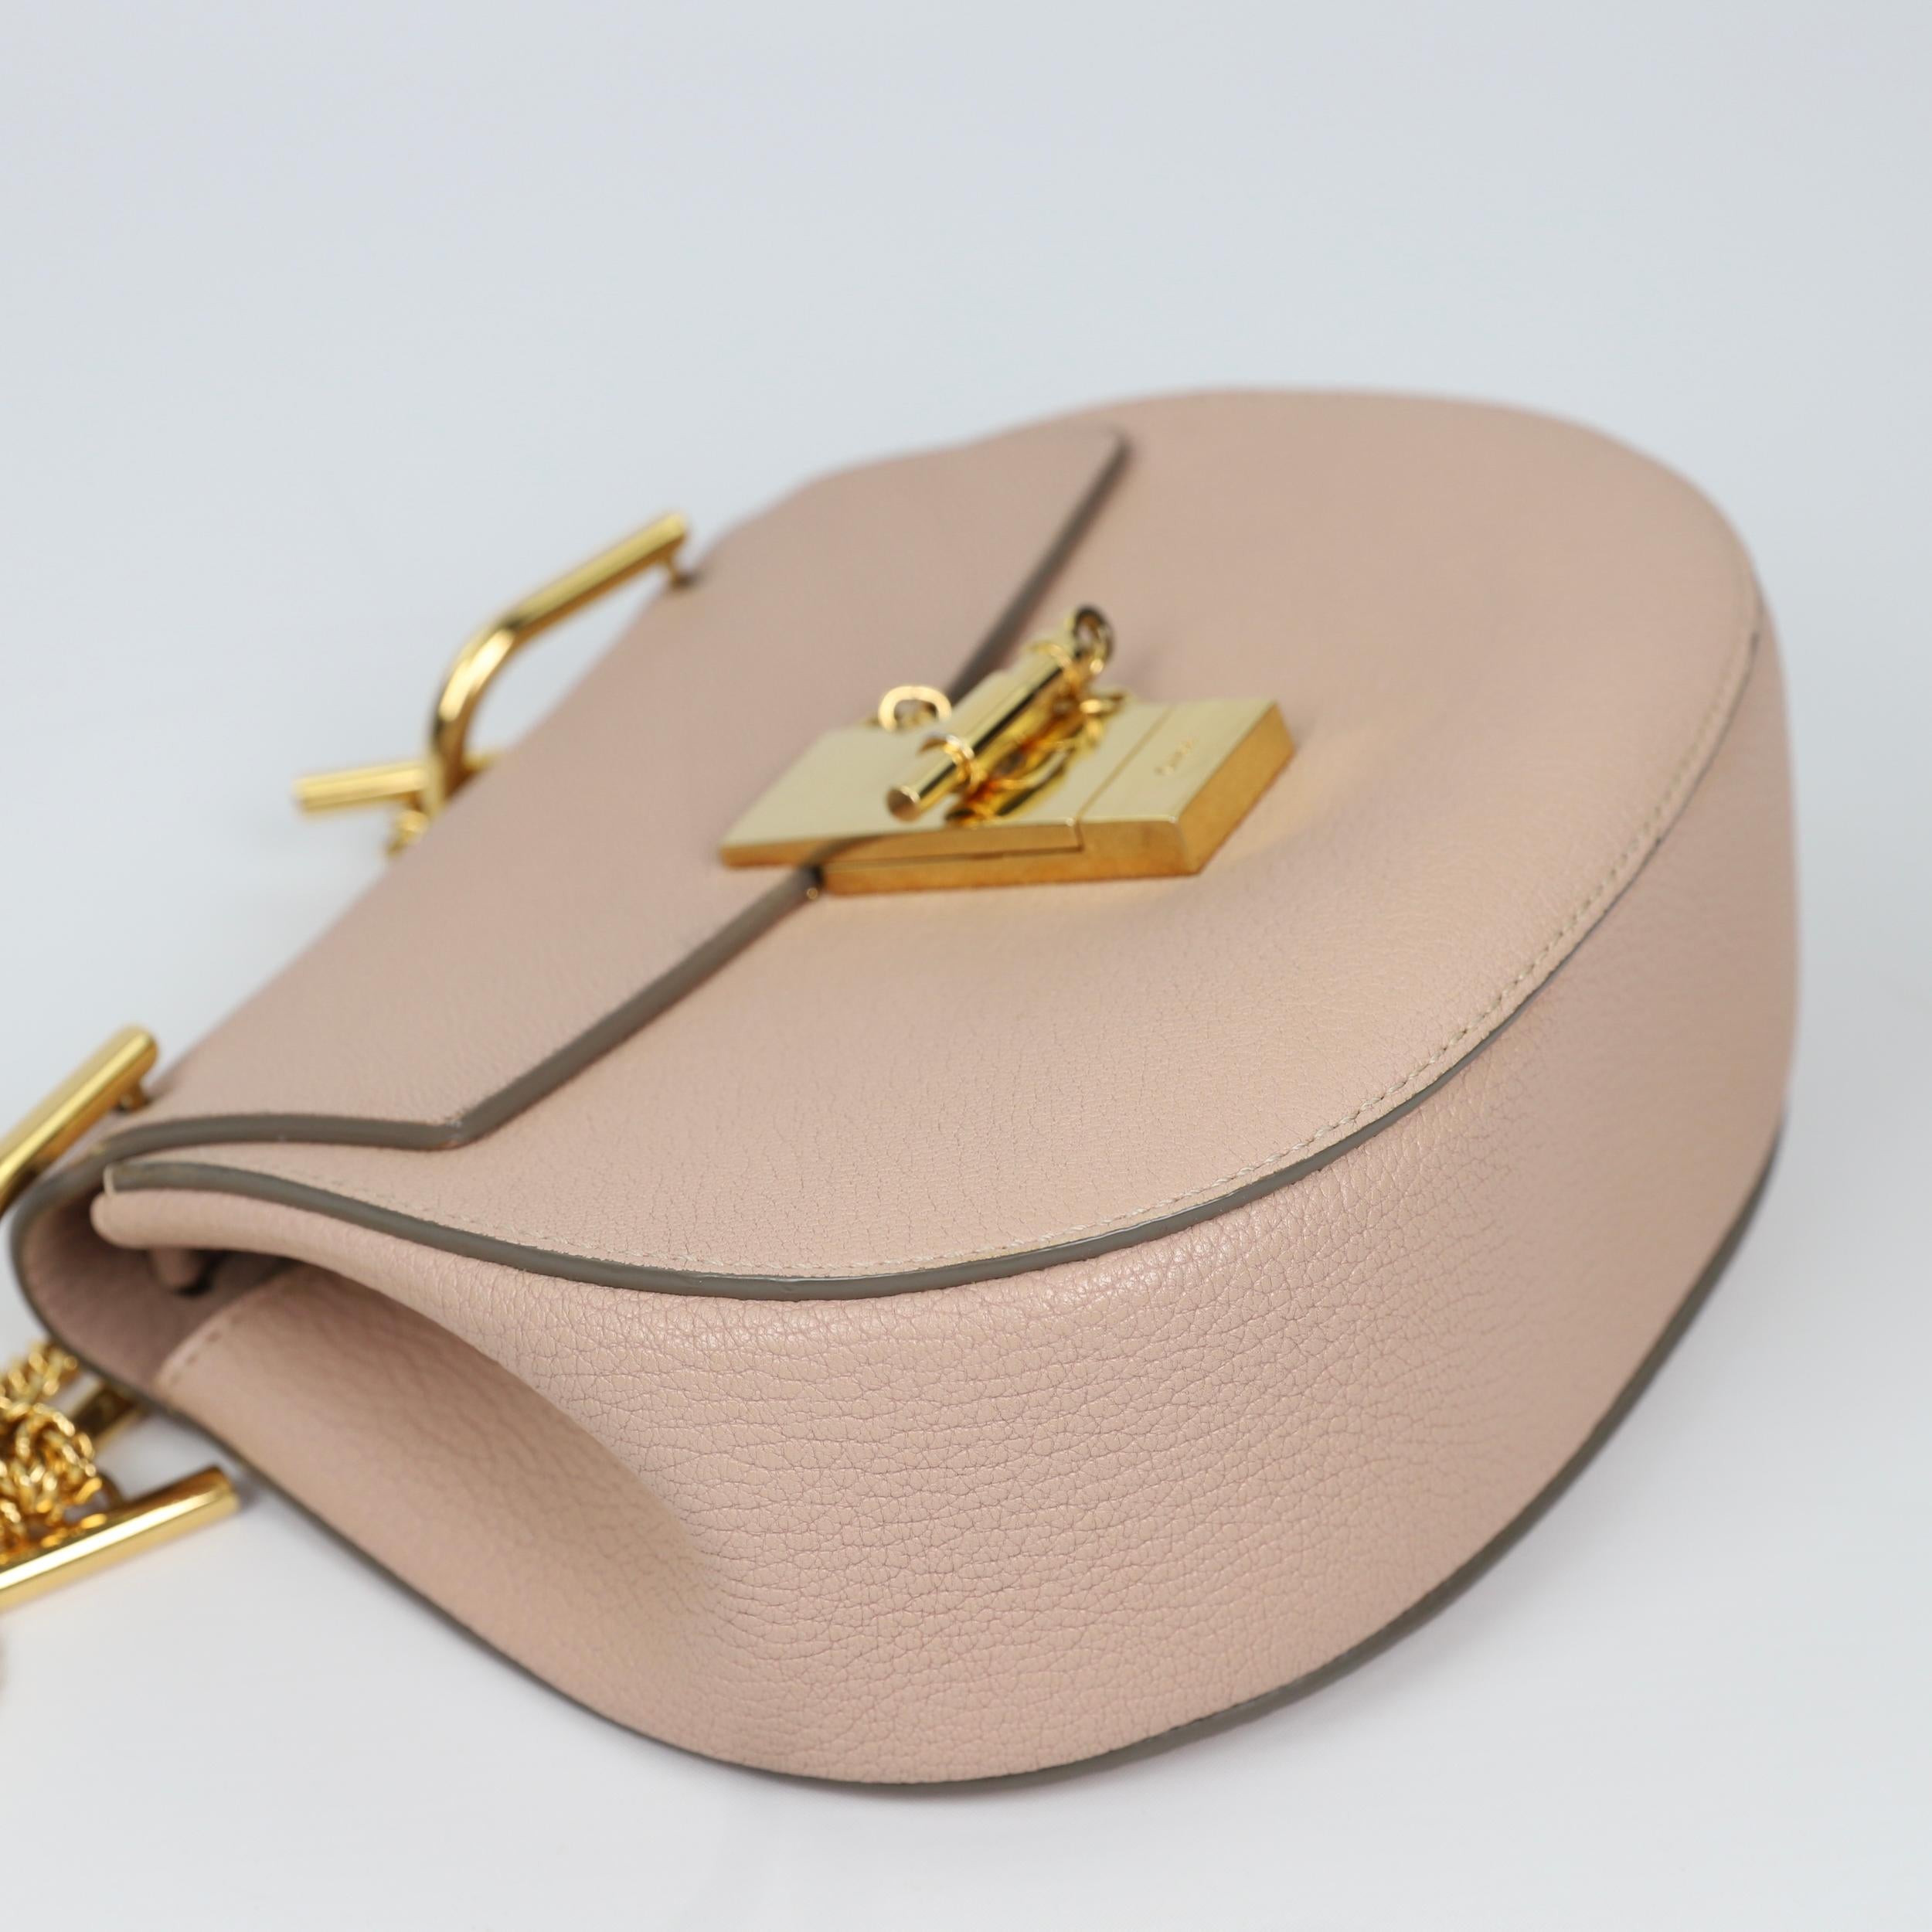 Chloé Drew leather handbag For Sale 13